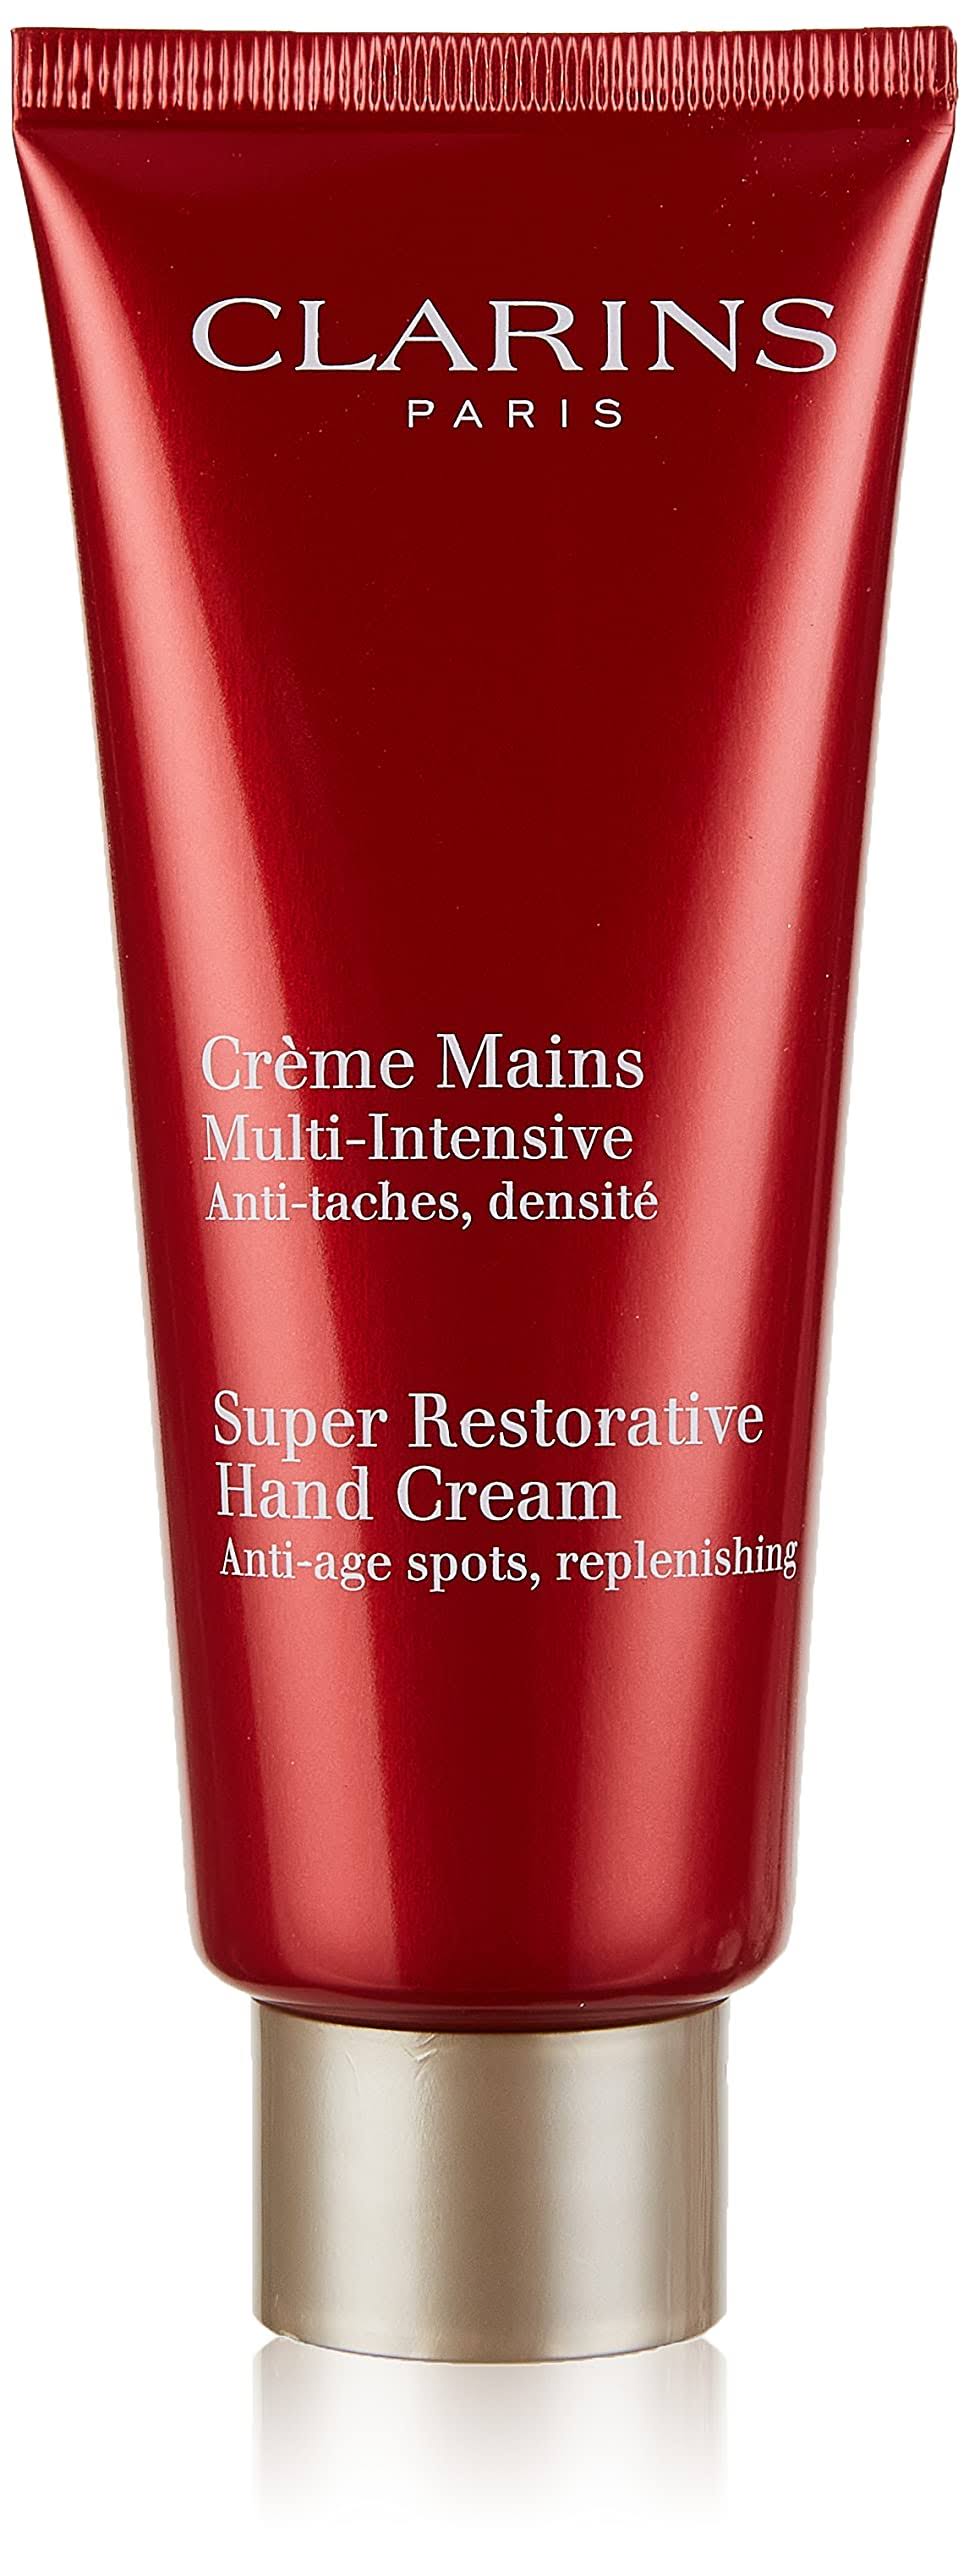 Super Restorative Hand Cream 100ml - Clarins